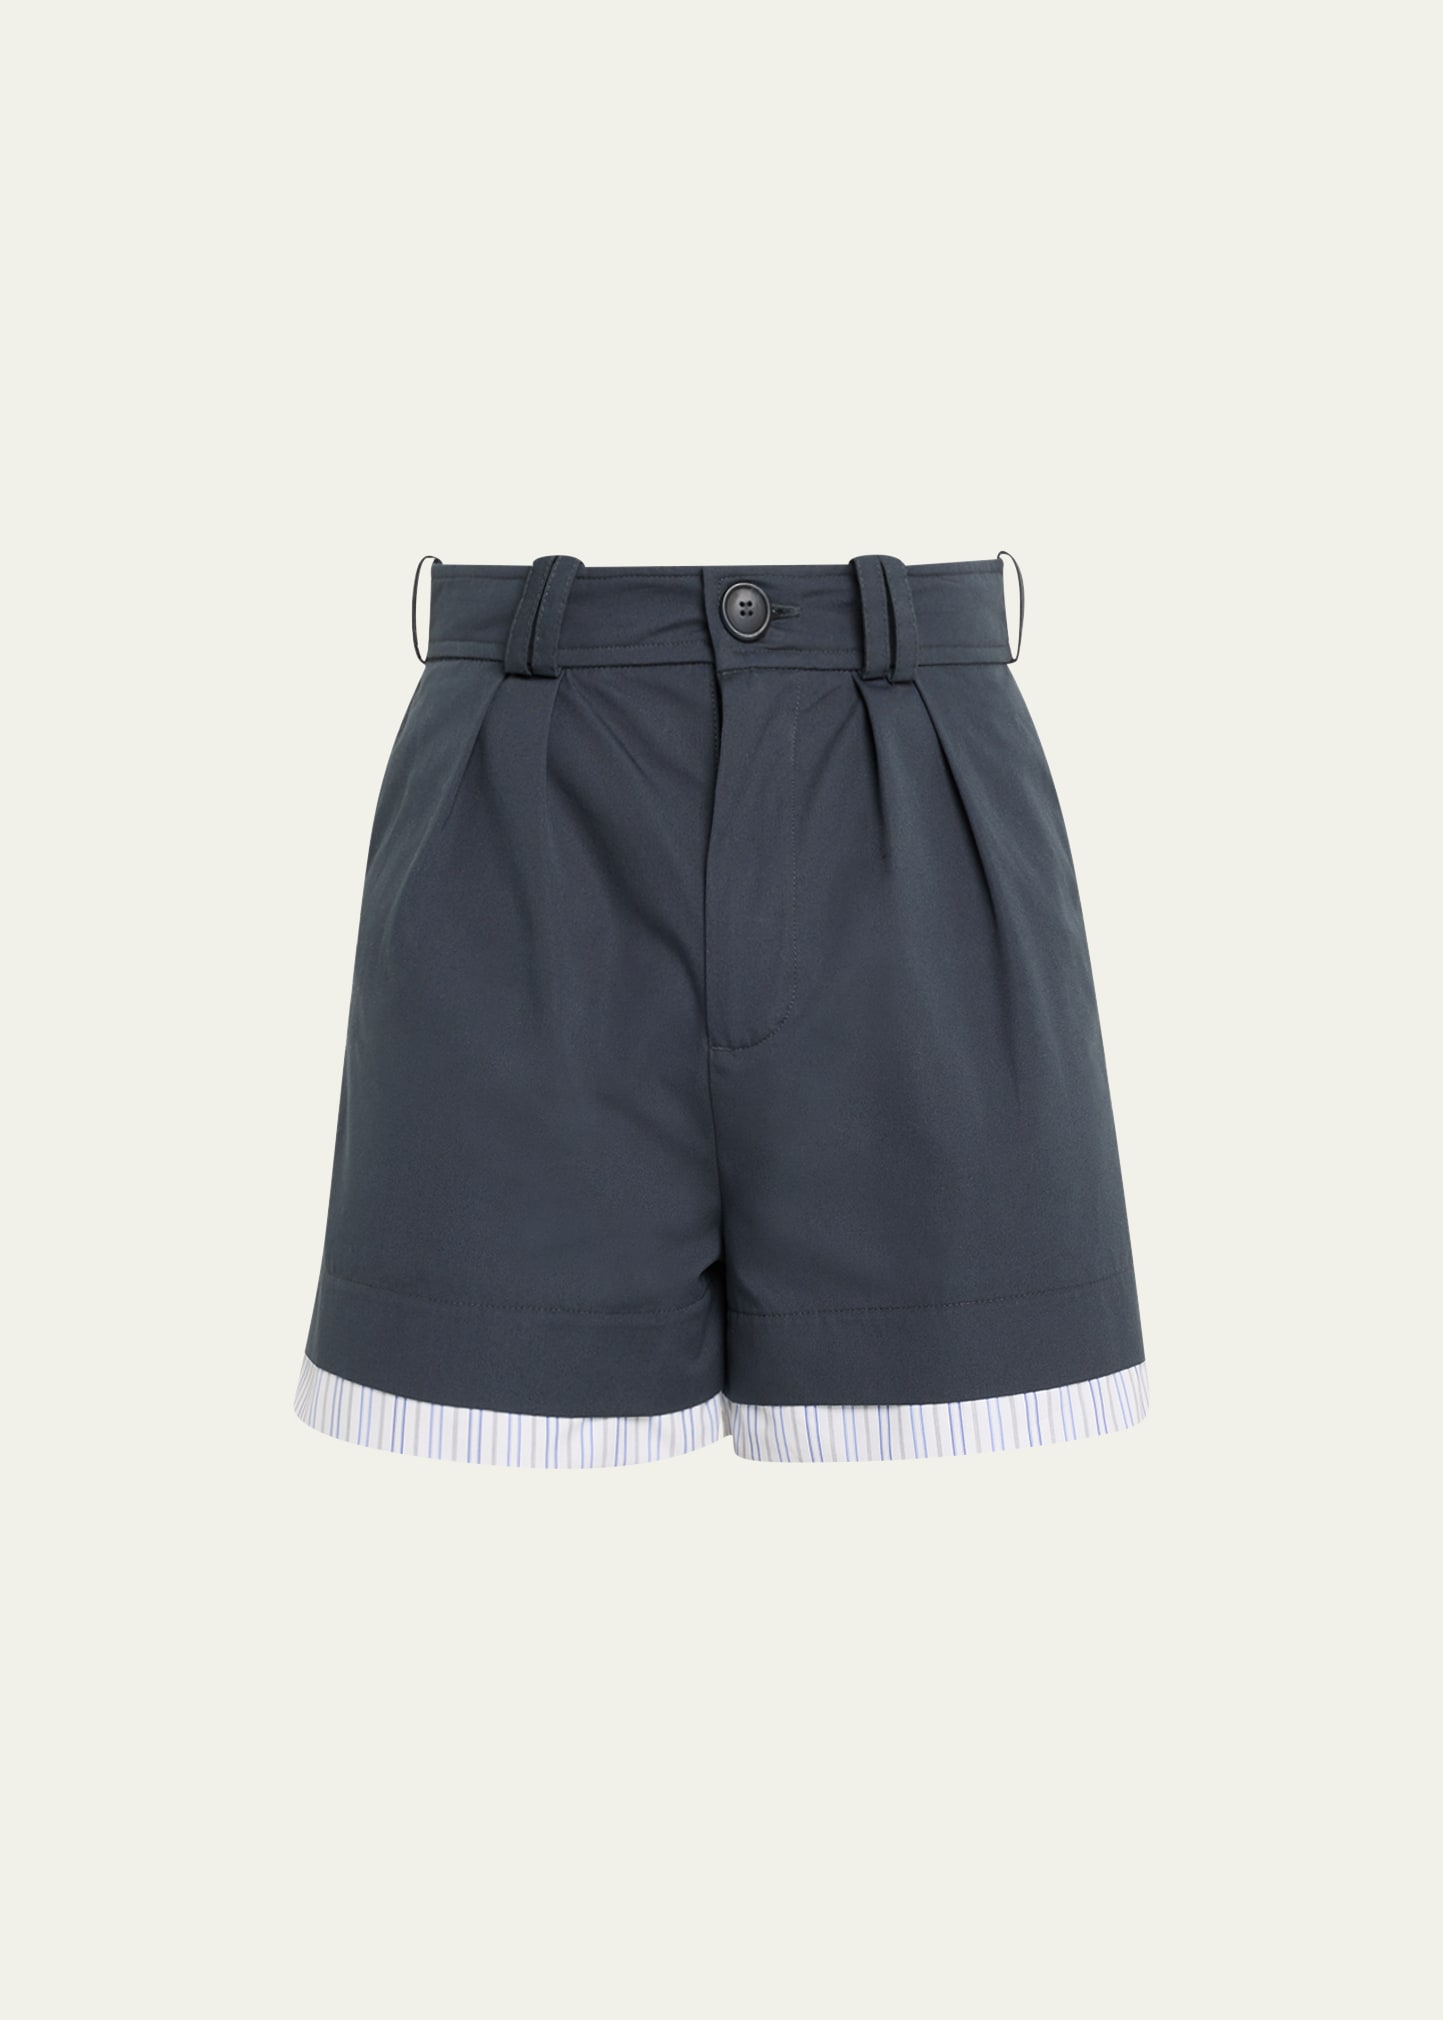 S.S. DALEY Men's Thomas Striped-Cuff Bloomer Shorts